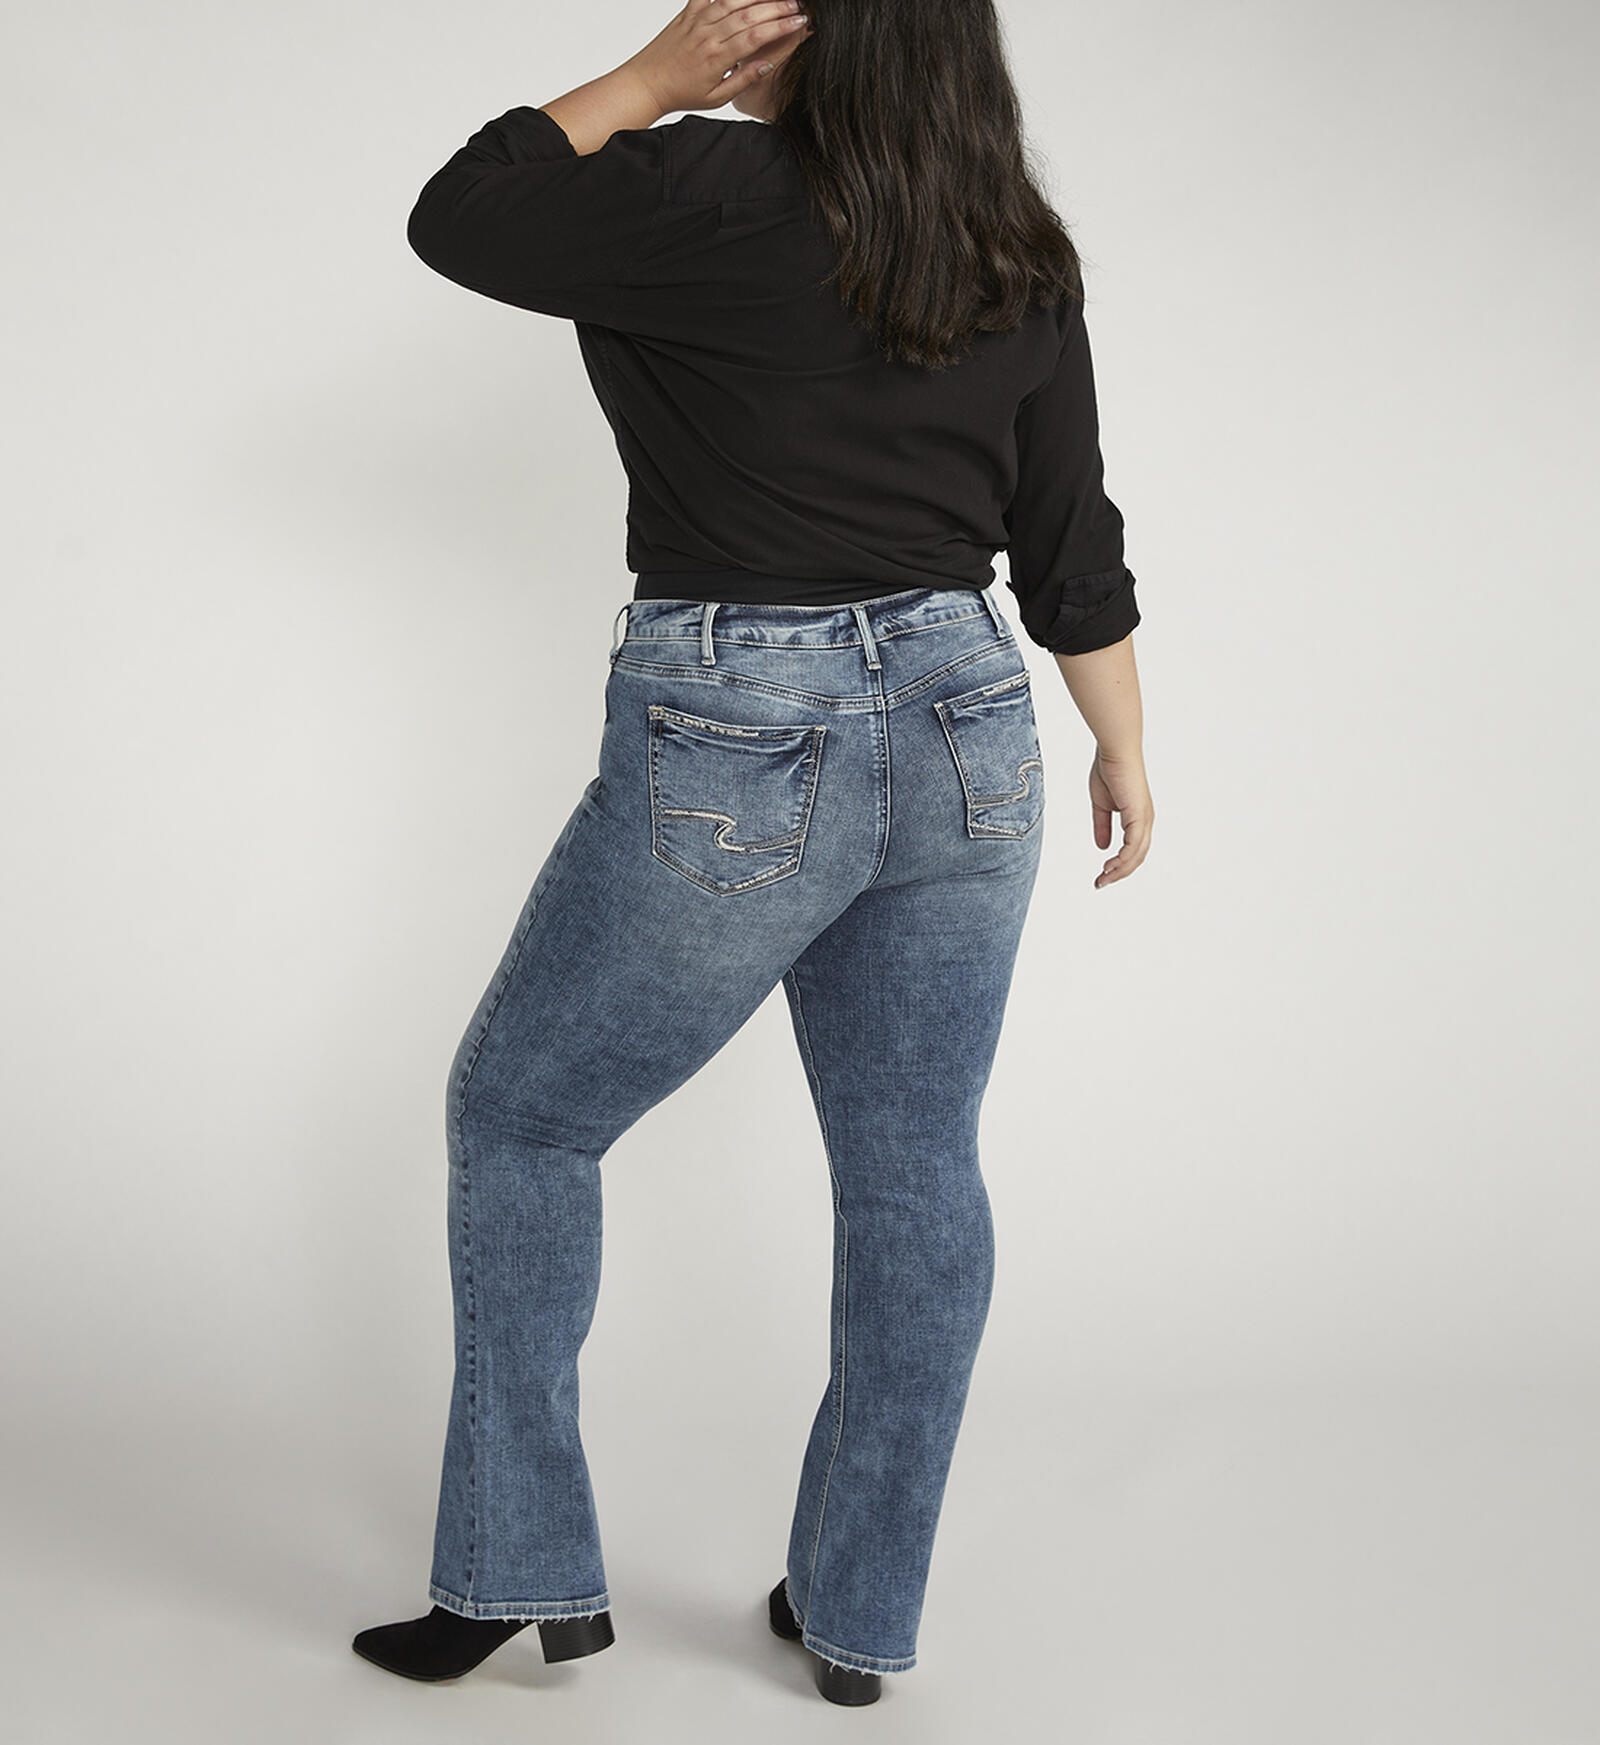 Women's Low Rise Slim Bootcut Jeans Slimming Girlfriend Jeans Plus